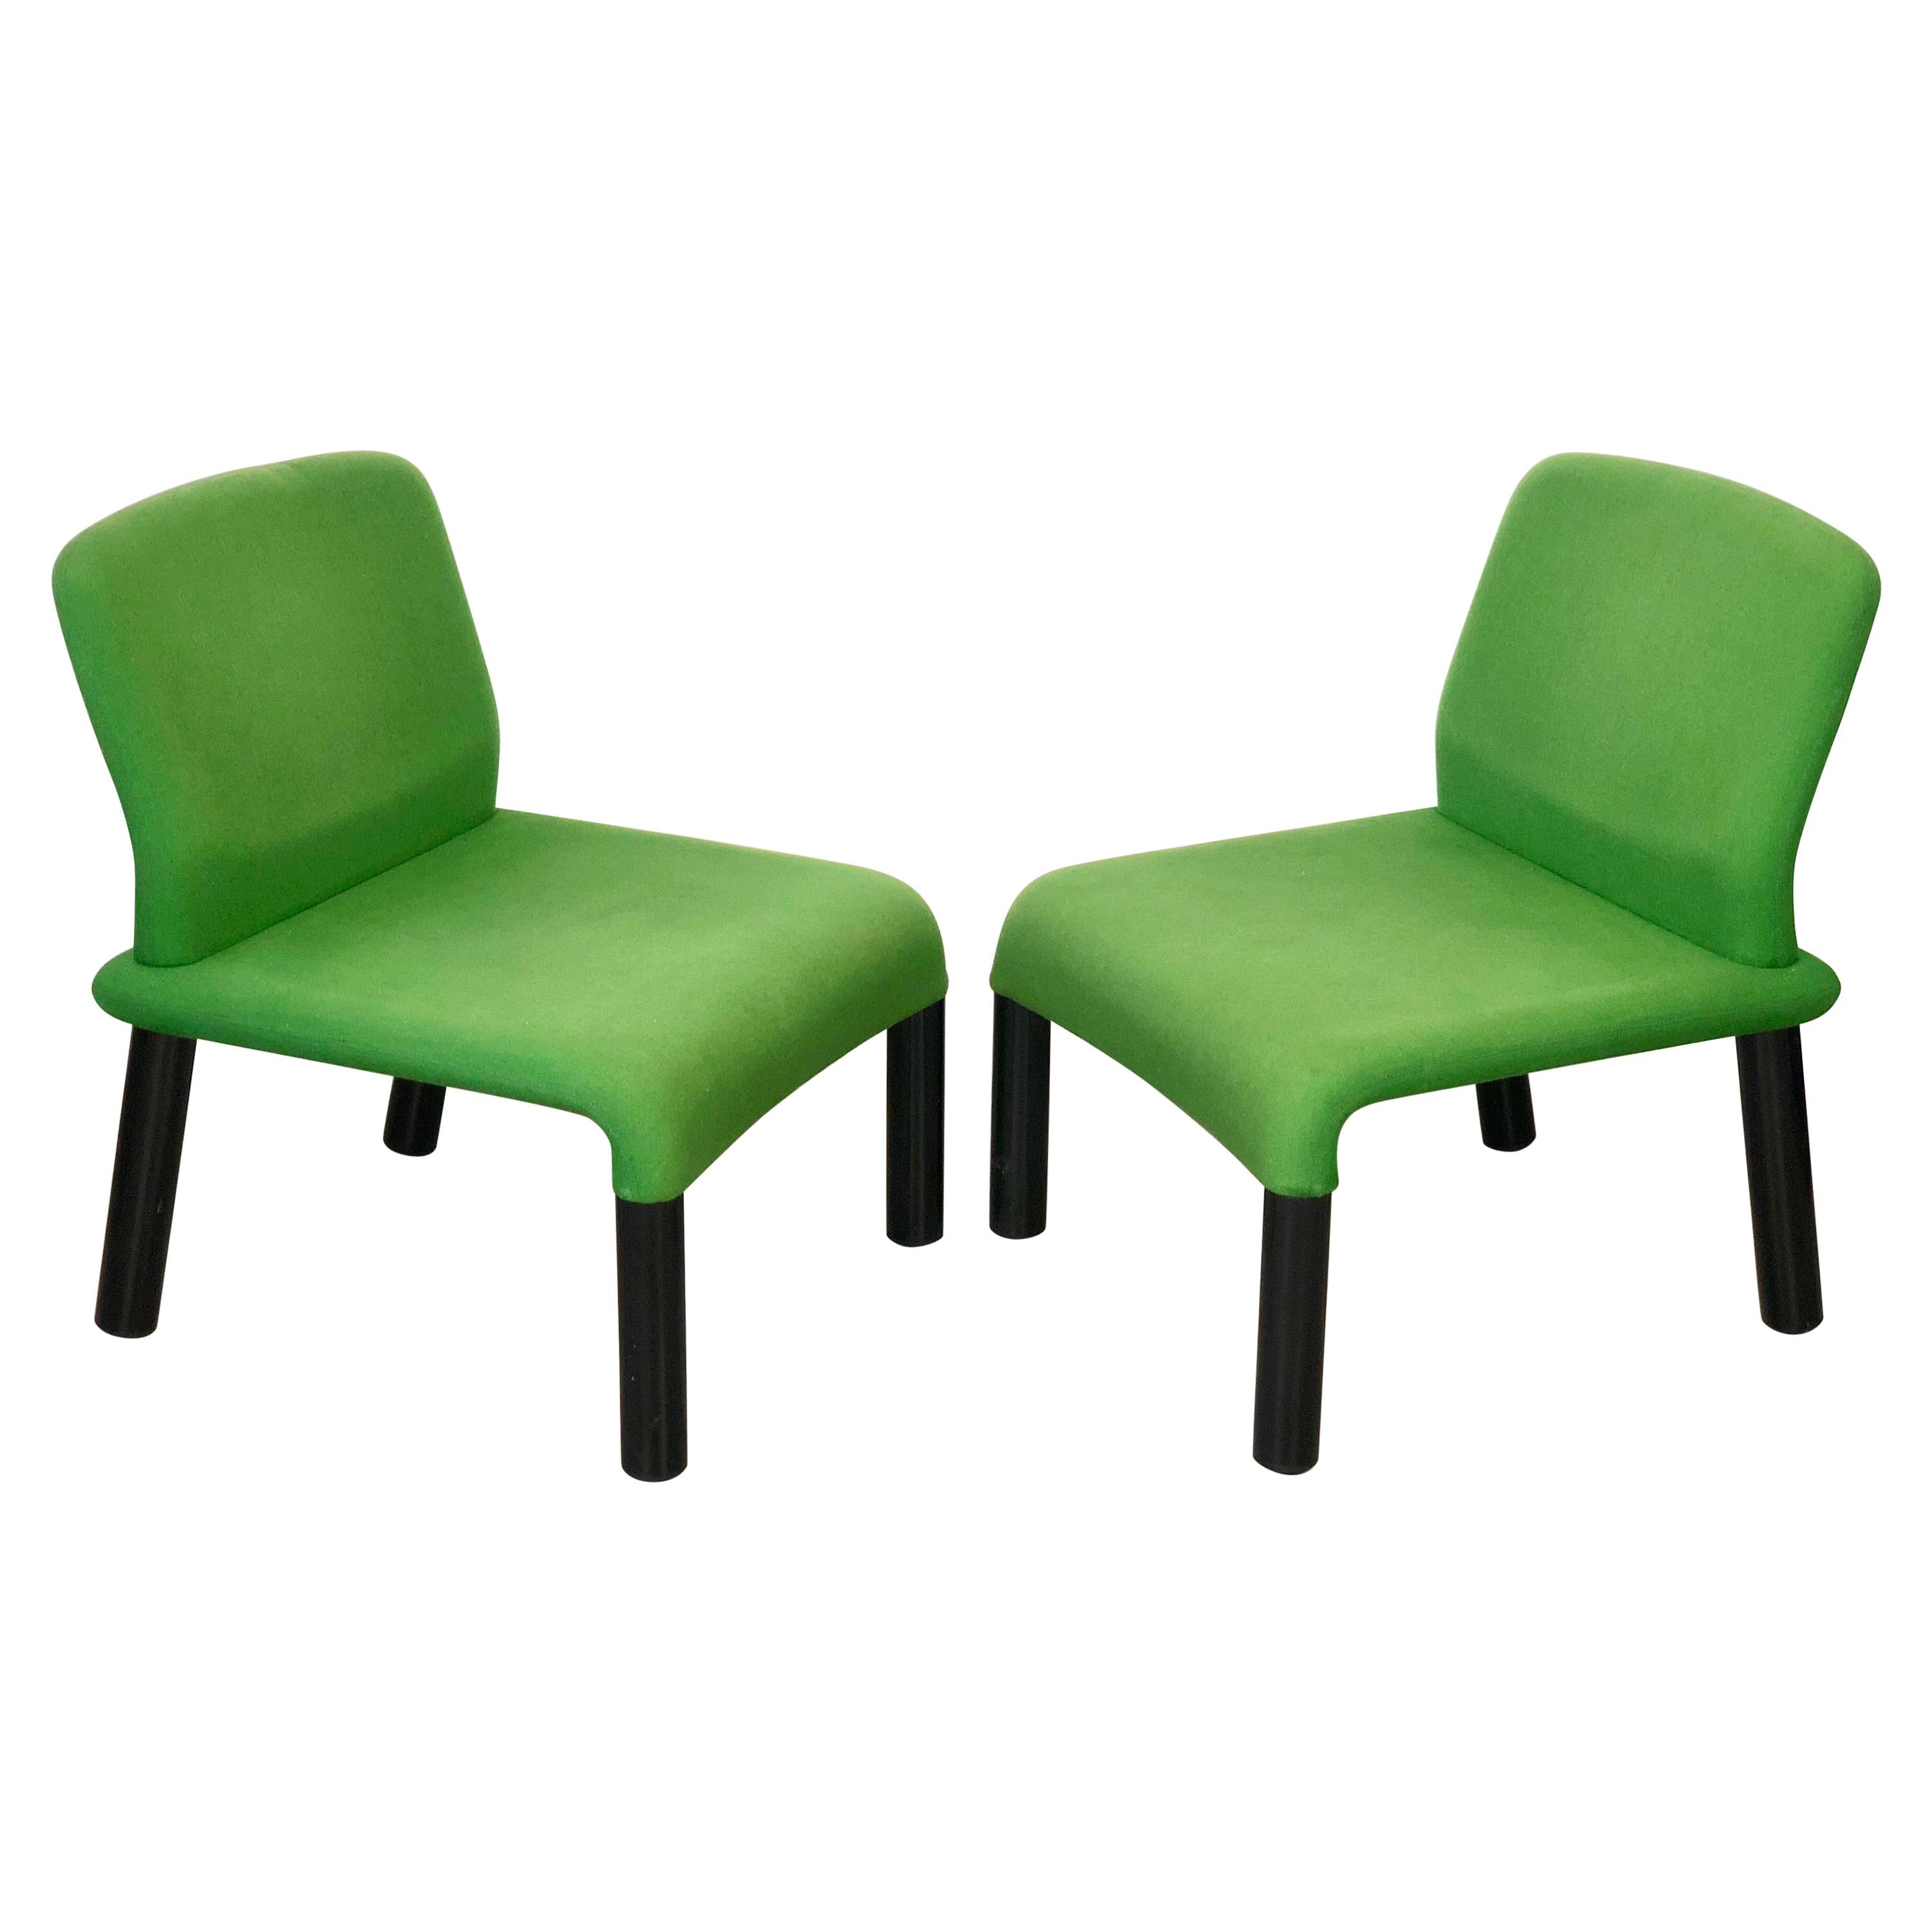 Paire de fauteuils verts en tissu plastique, Italie, 1970